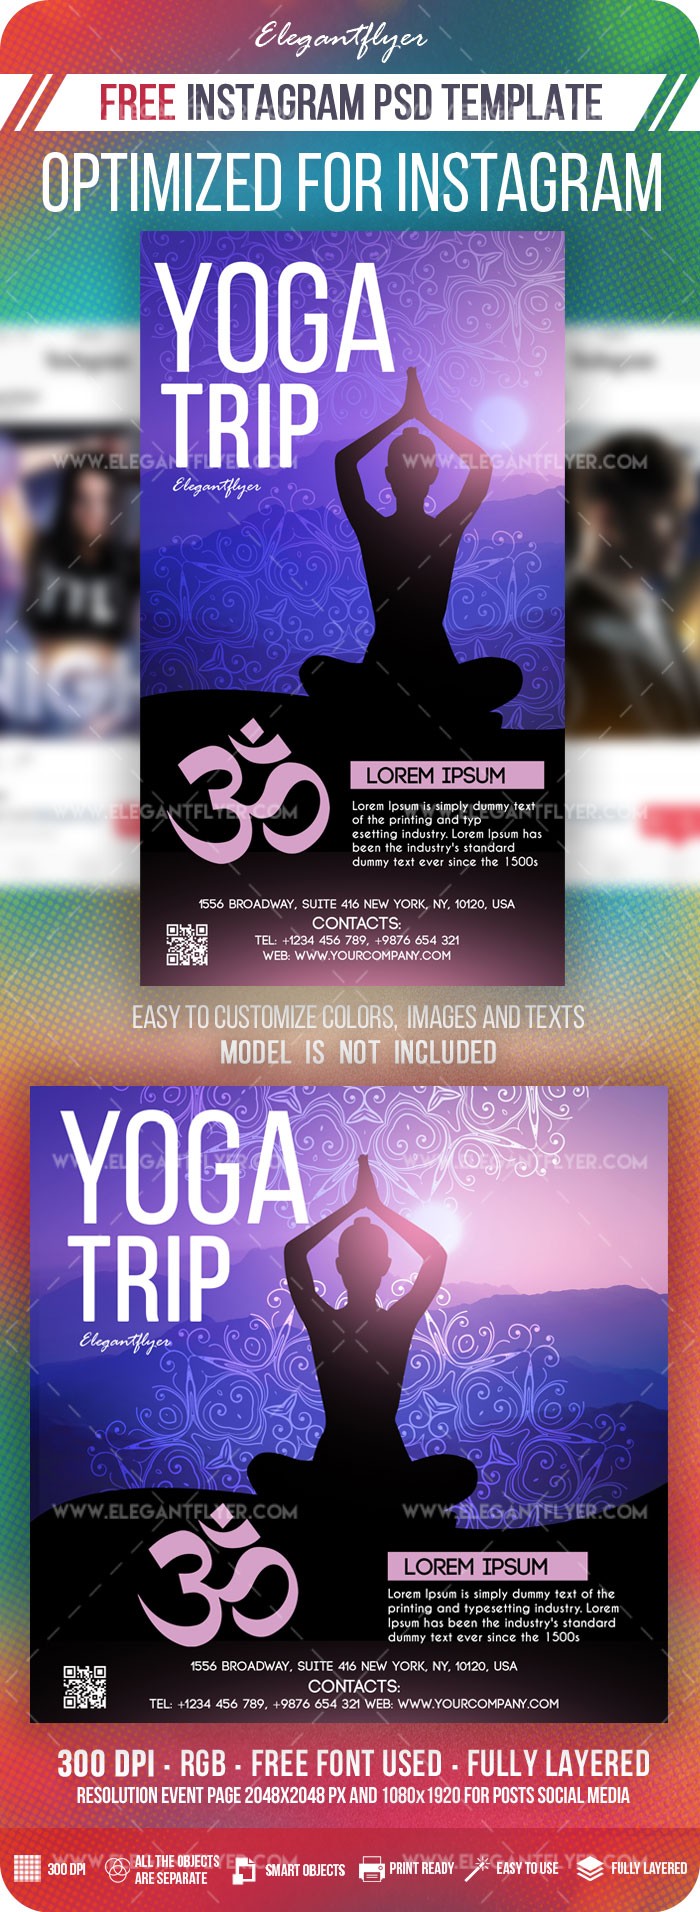 Viaje de yoga en Instagram by ElegantFlyer